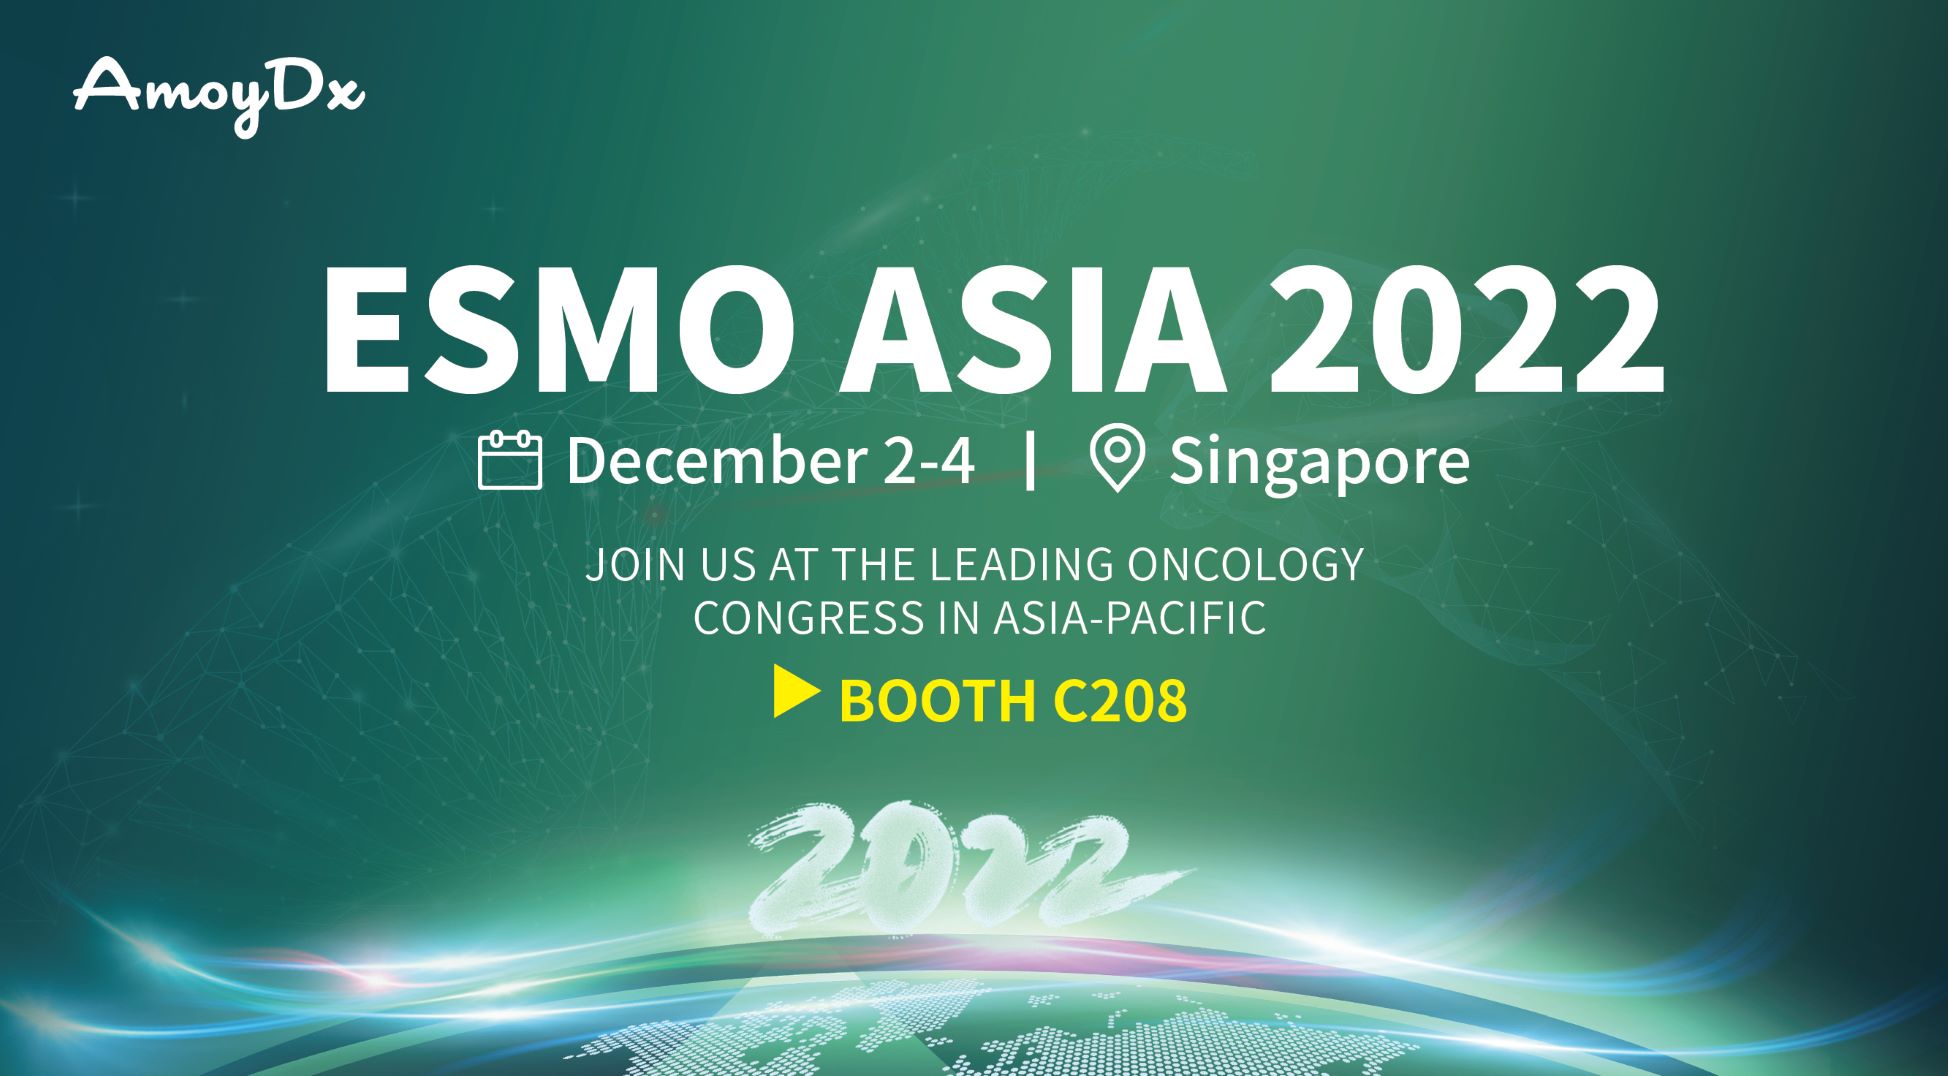 AmoyDx to Exhibit at ESMO Asia Congress 2022